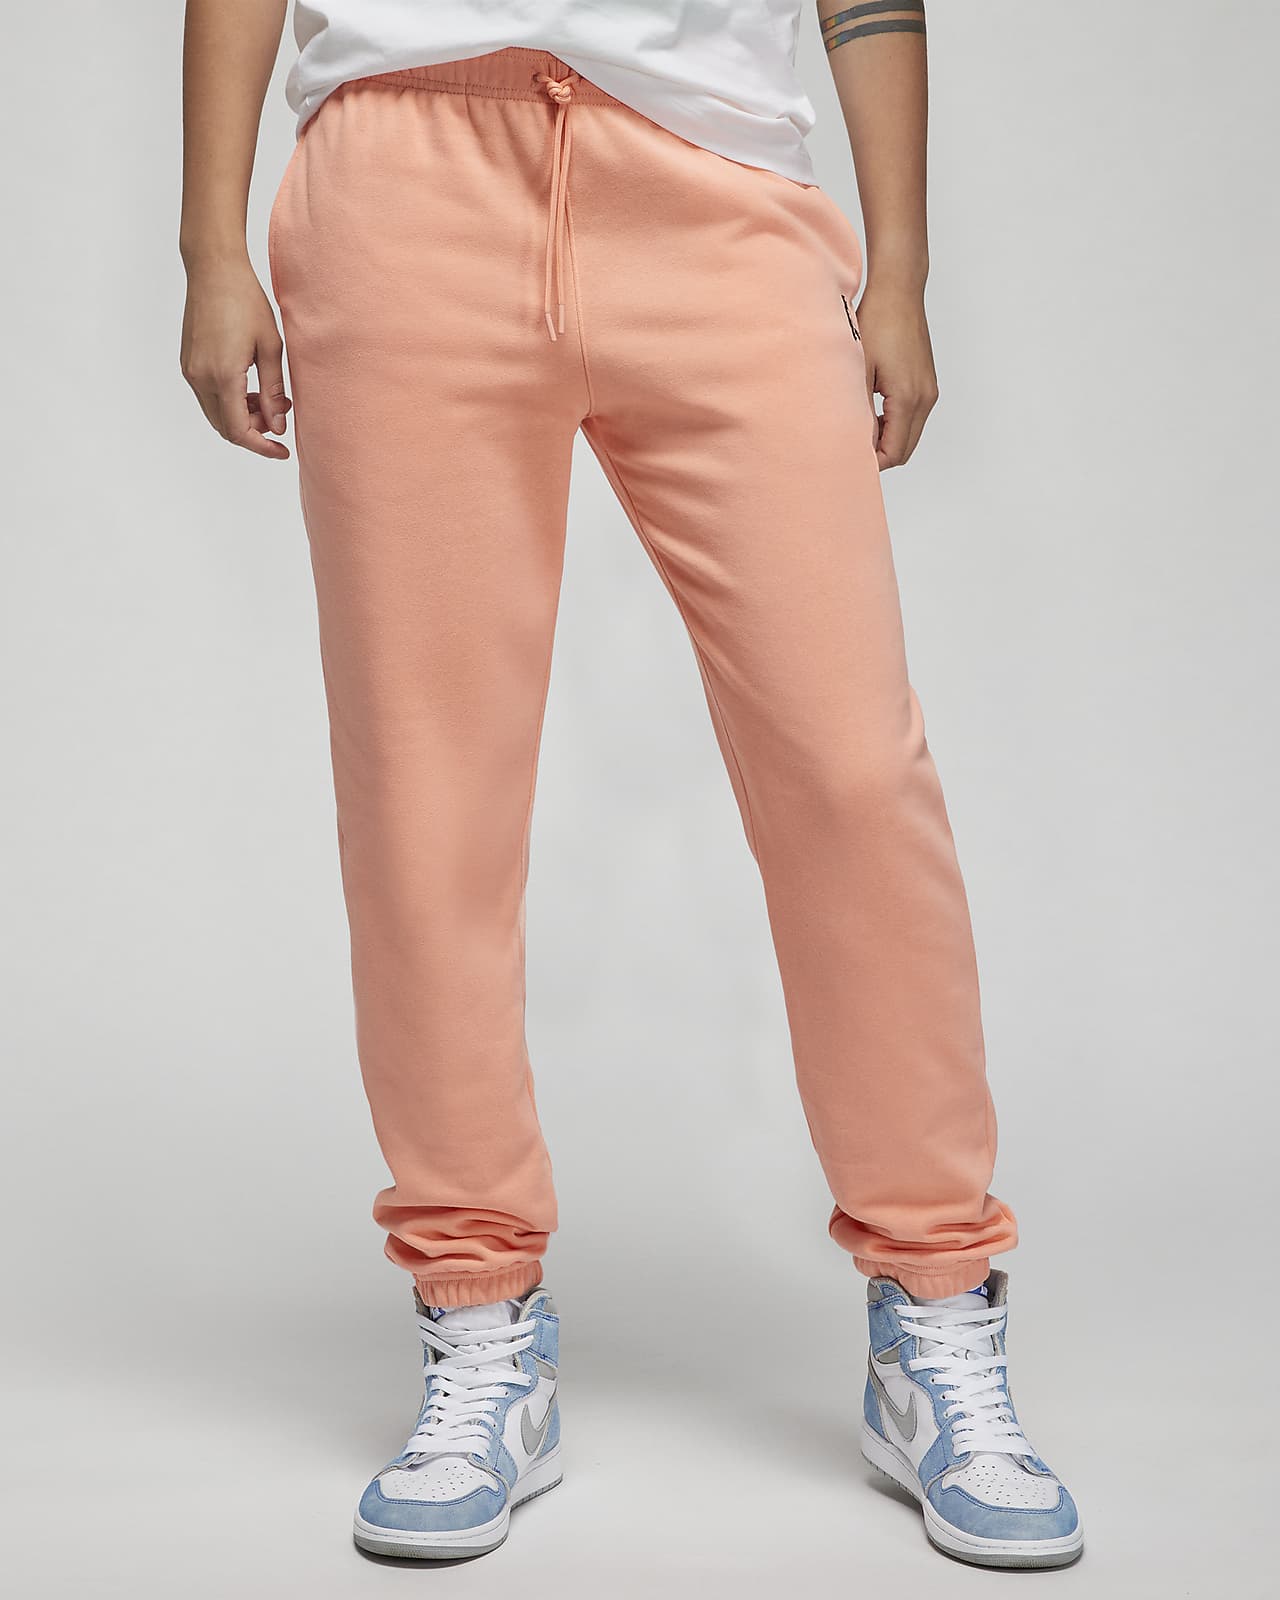 Pantalon en tissu Fleece Jordan Essentials pour Femme